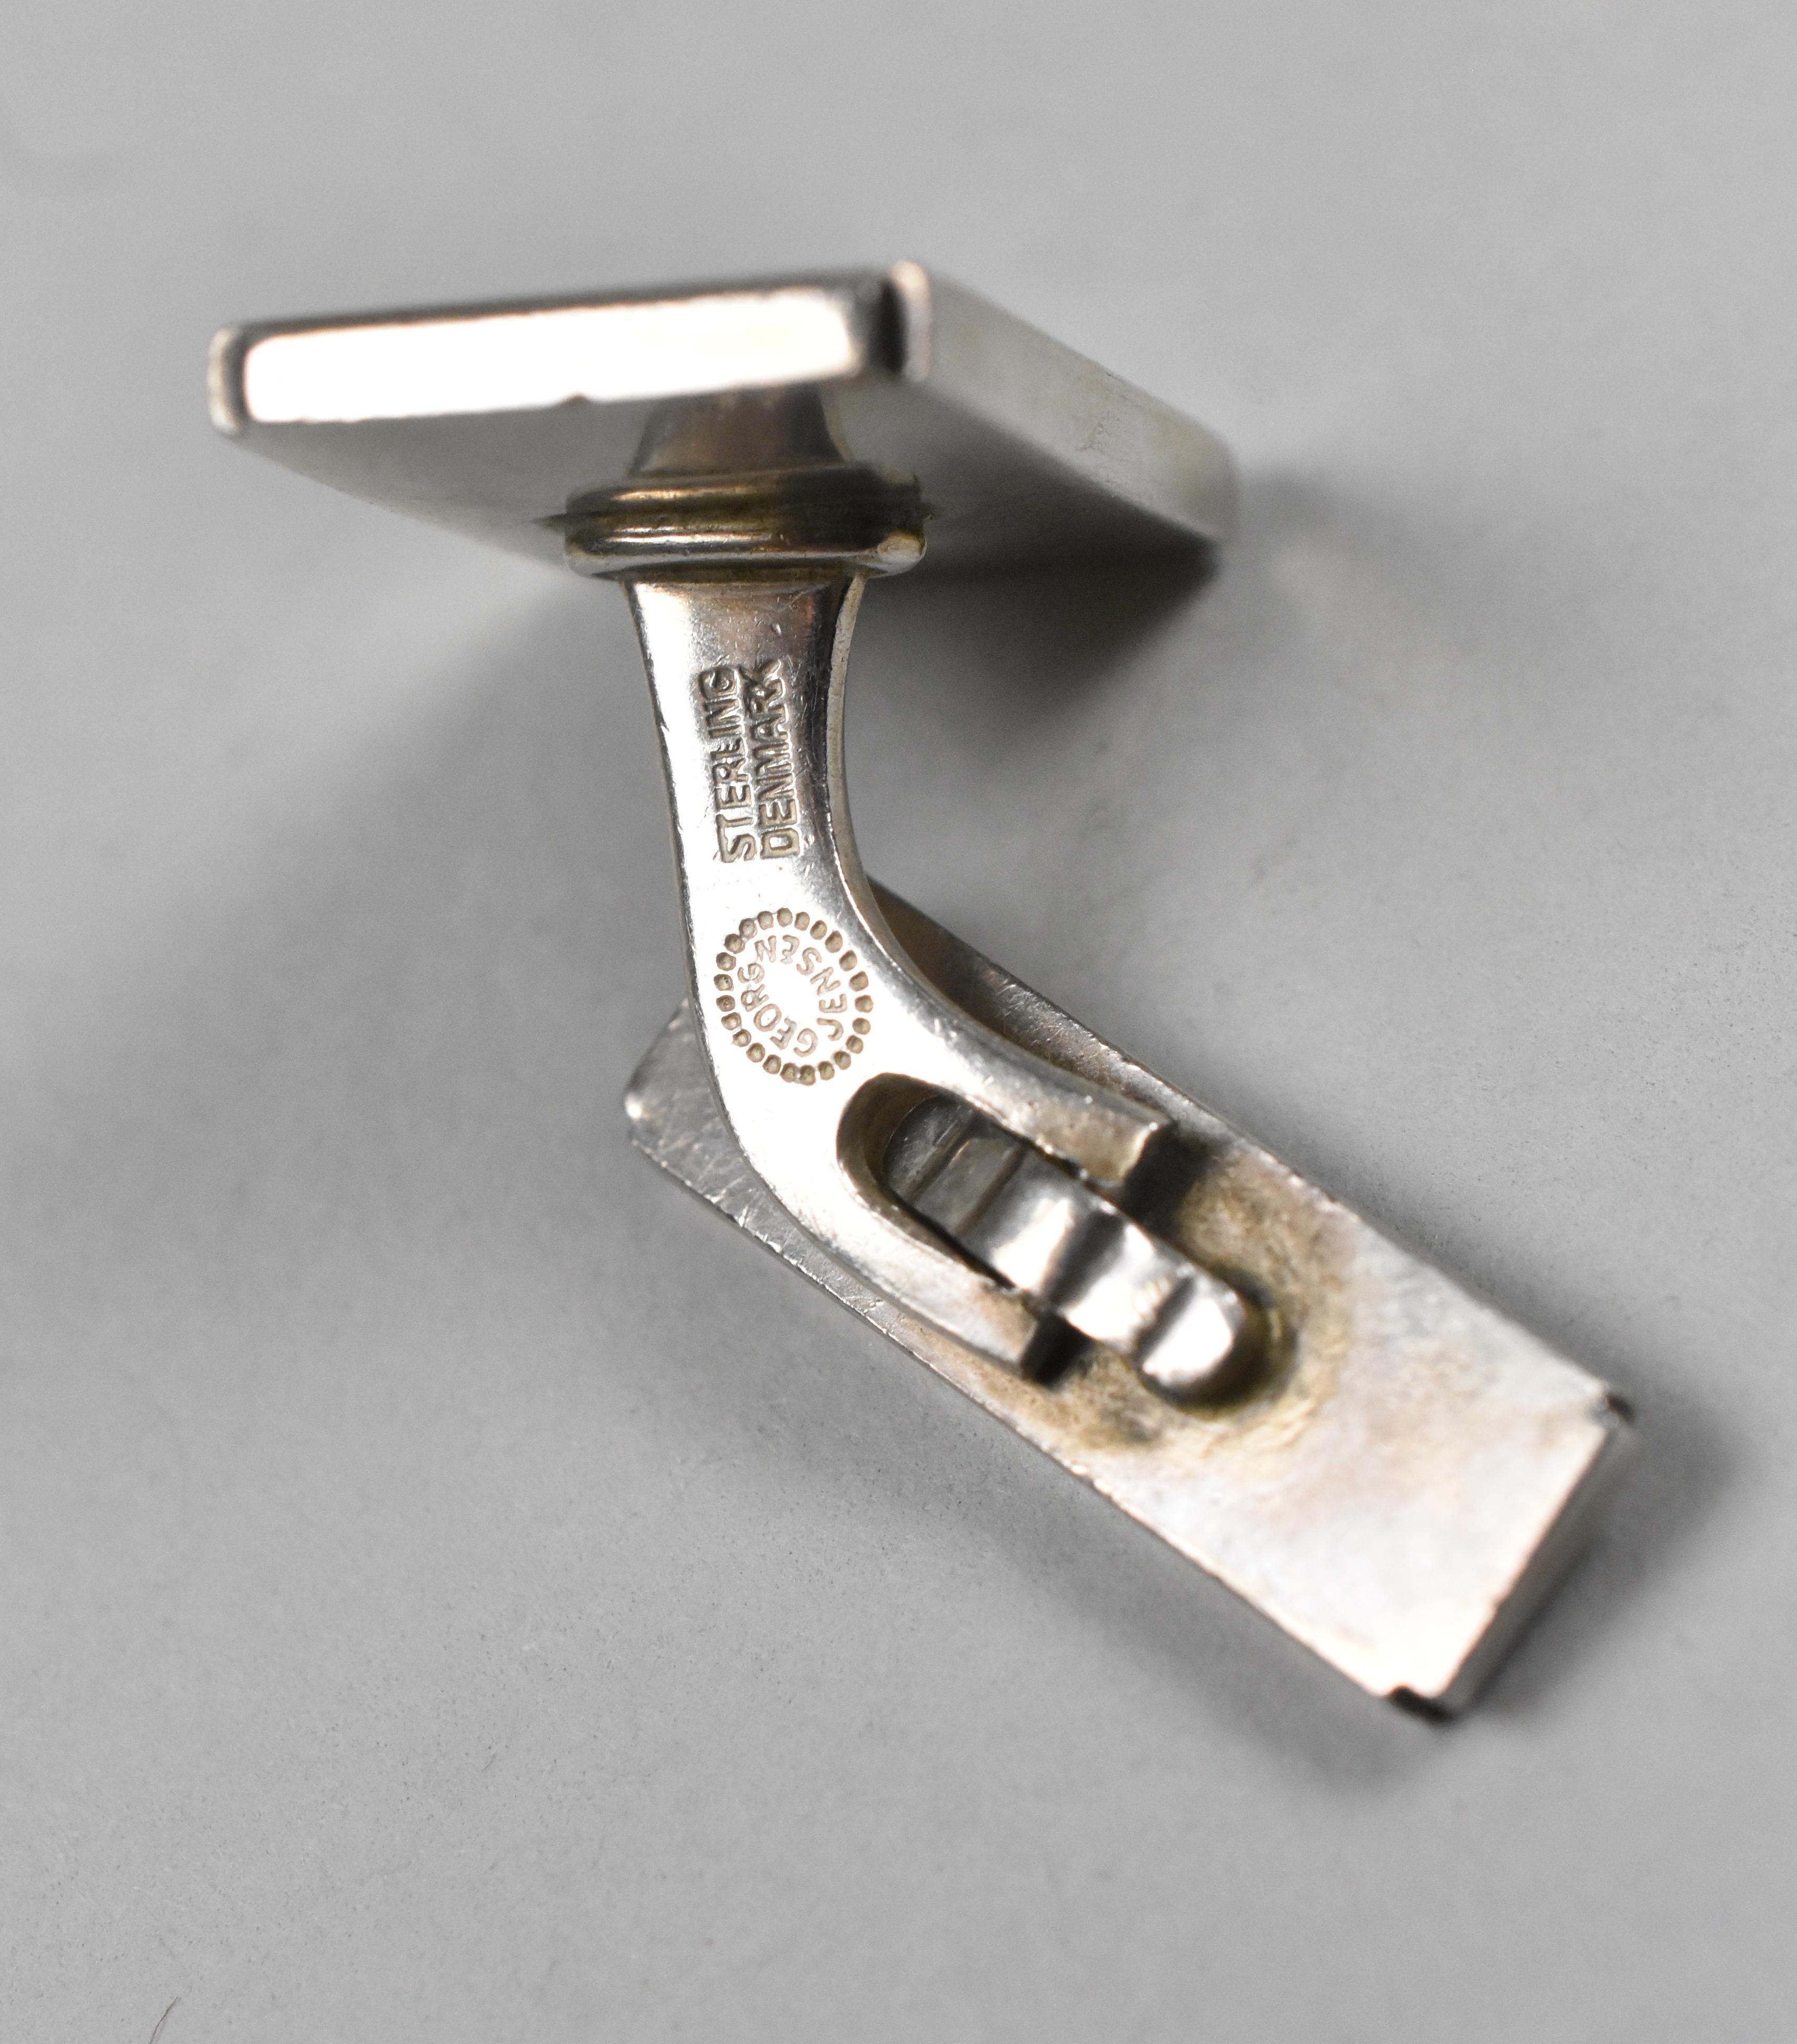 European Georg Jensen Sterling Silver Cufflinks, #59A, Designed by Henry Pilstrup